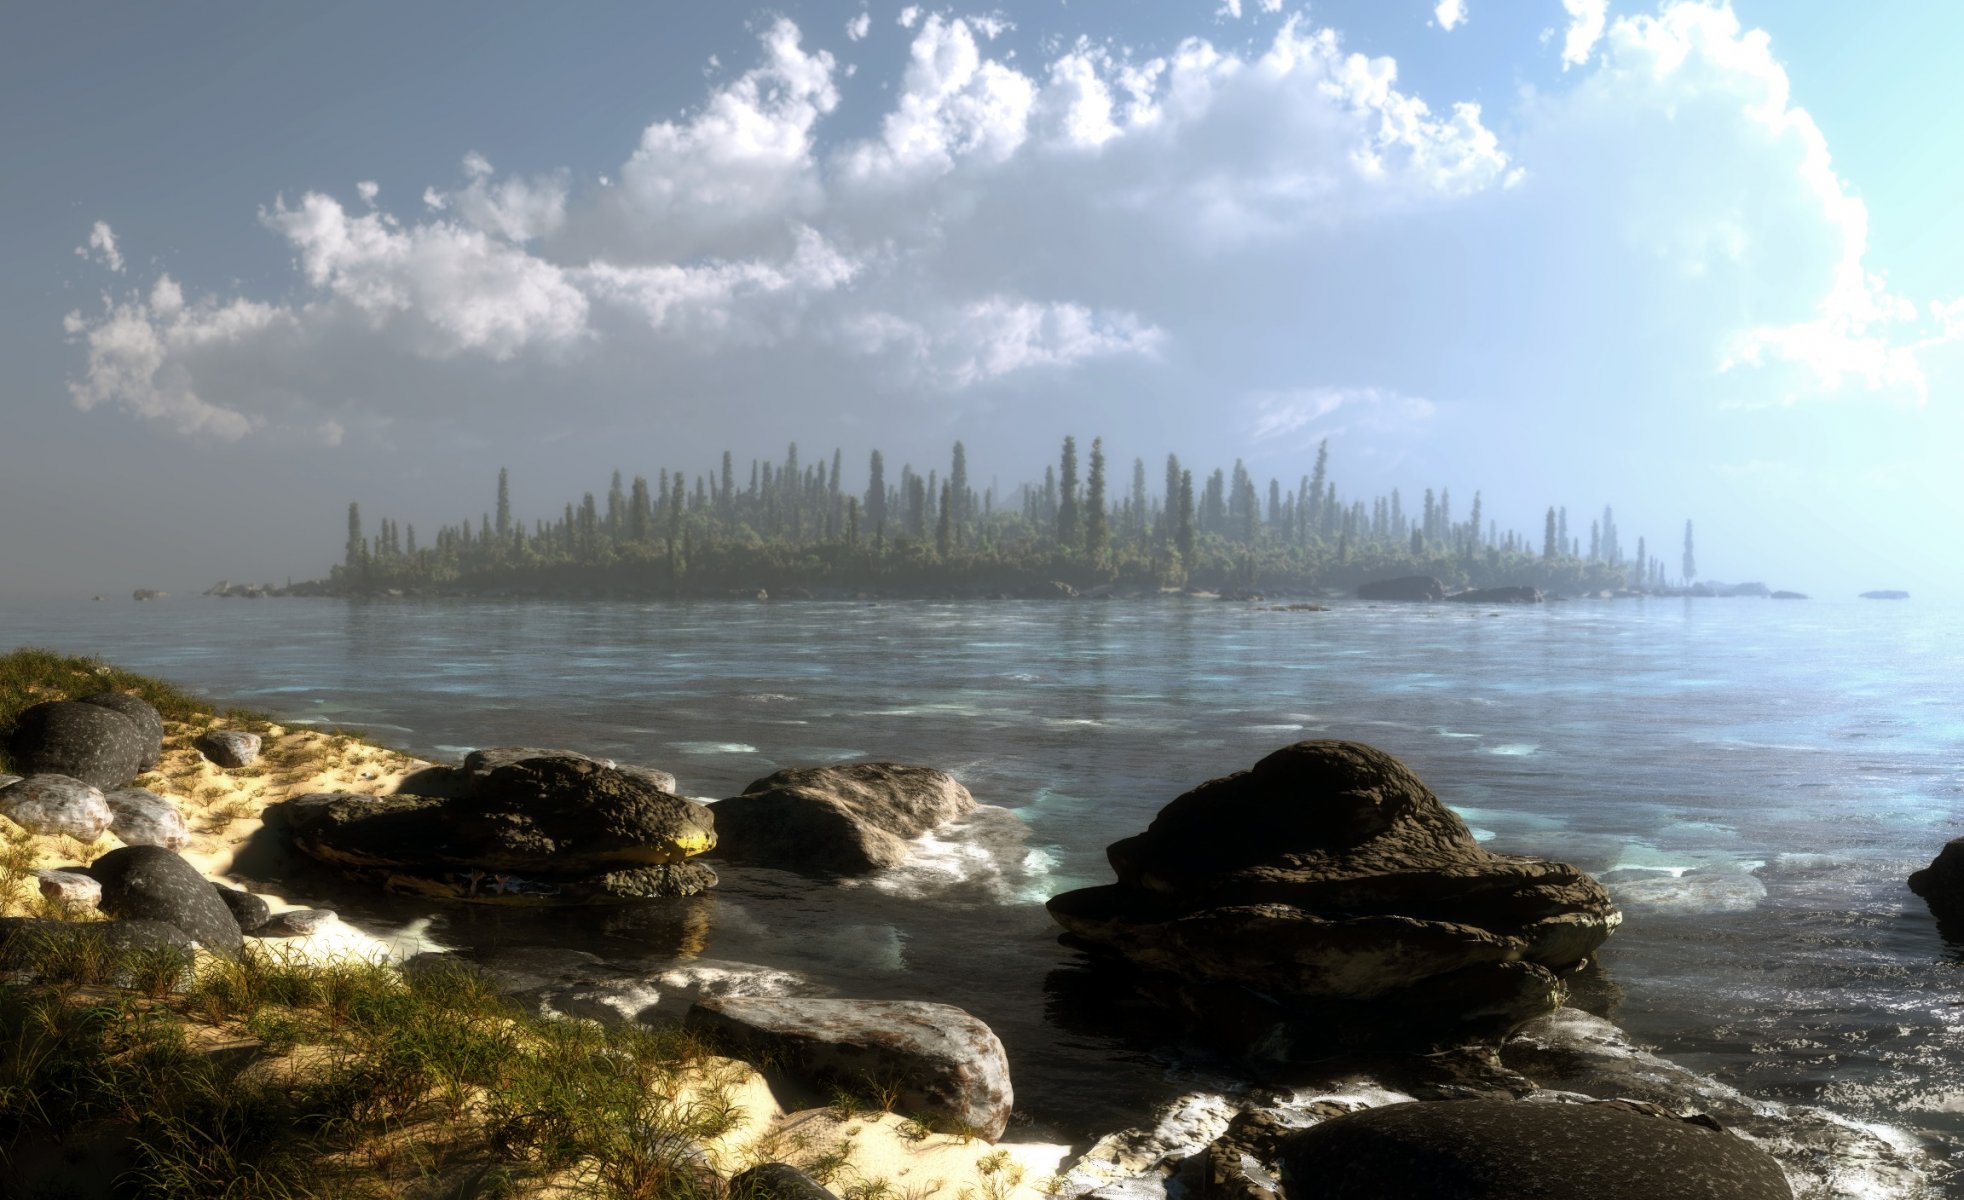 arte klontak paesaggio lago acqua pietre foresta alberi isola nuvole